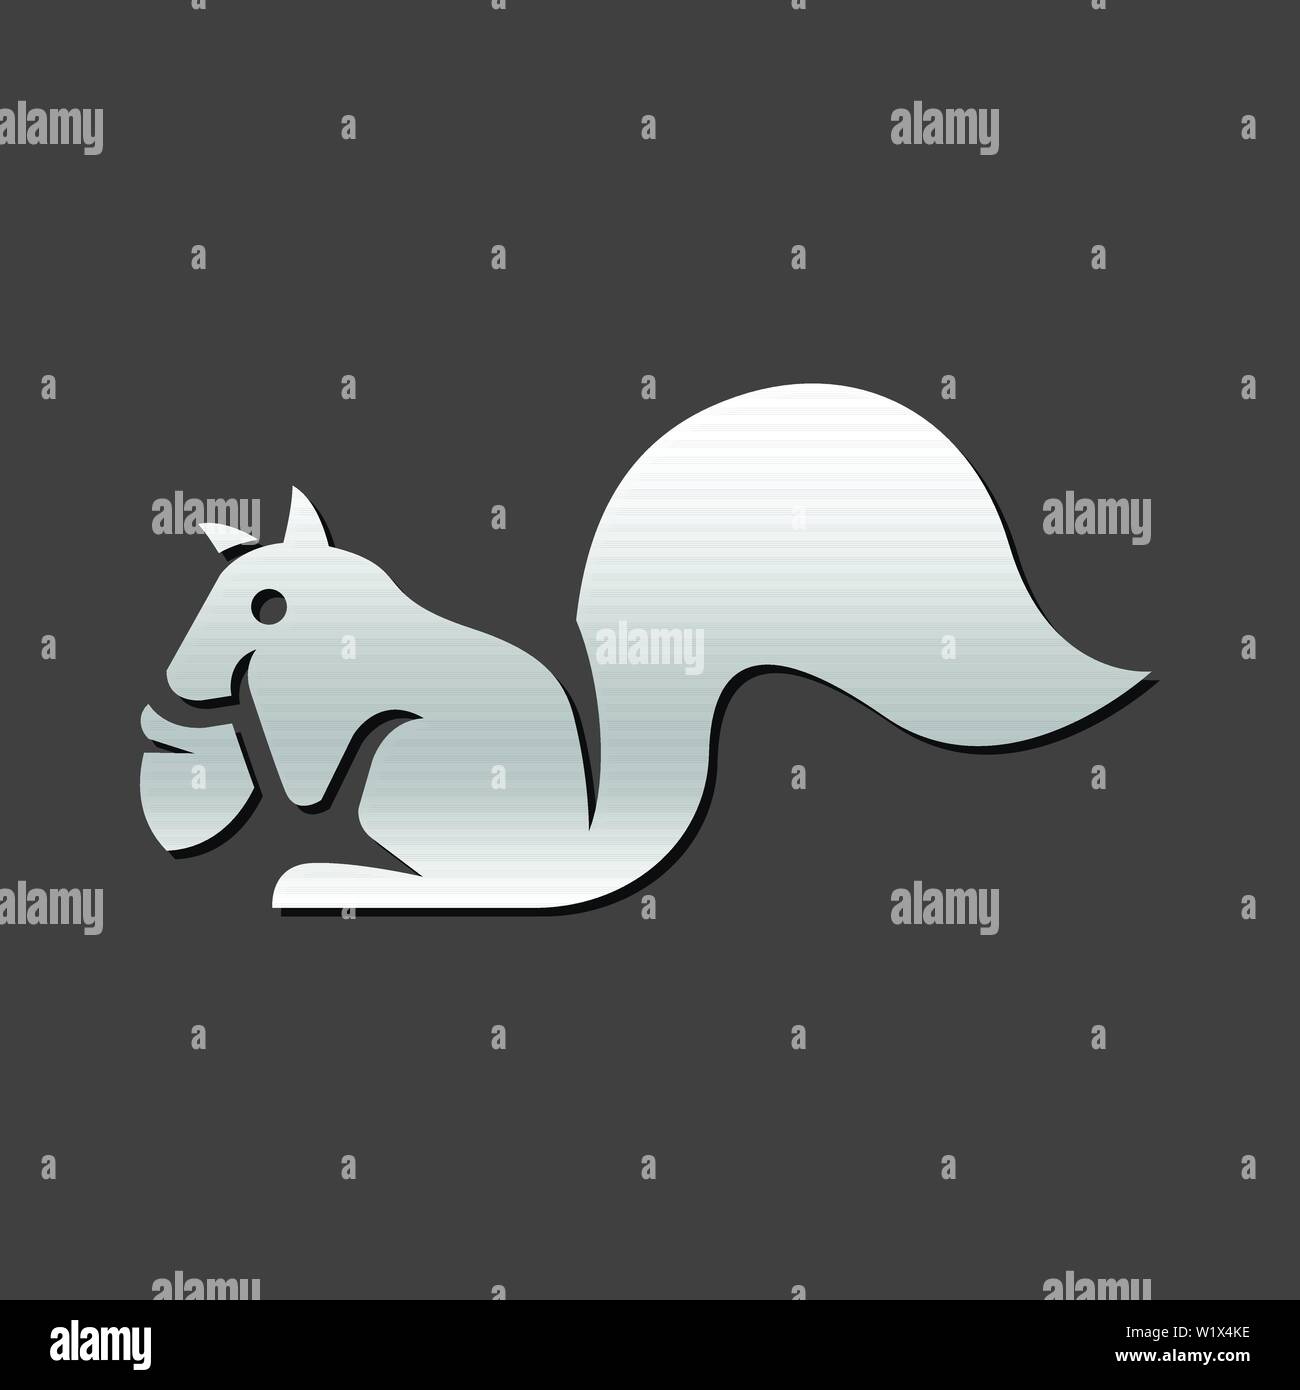 Eichhörnchen Symbol in metallic grau farbe Stil. Säugetier Tier Stock Vektor